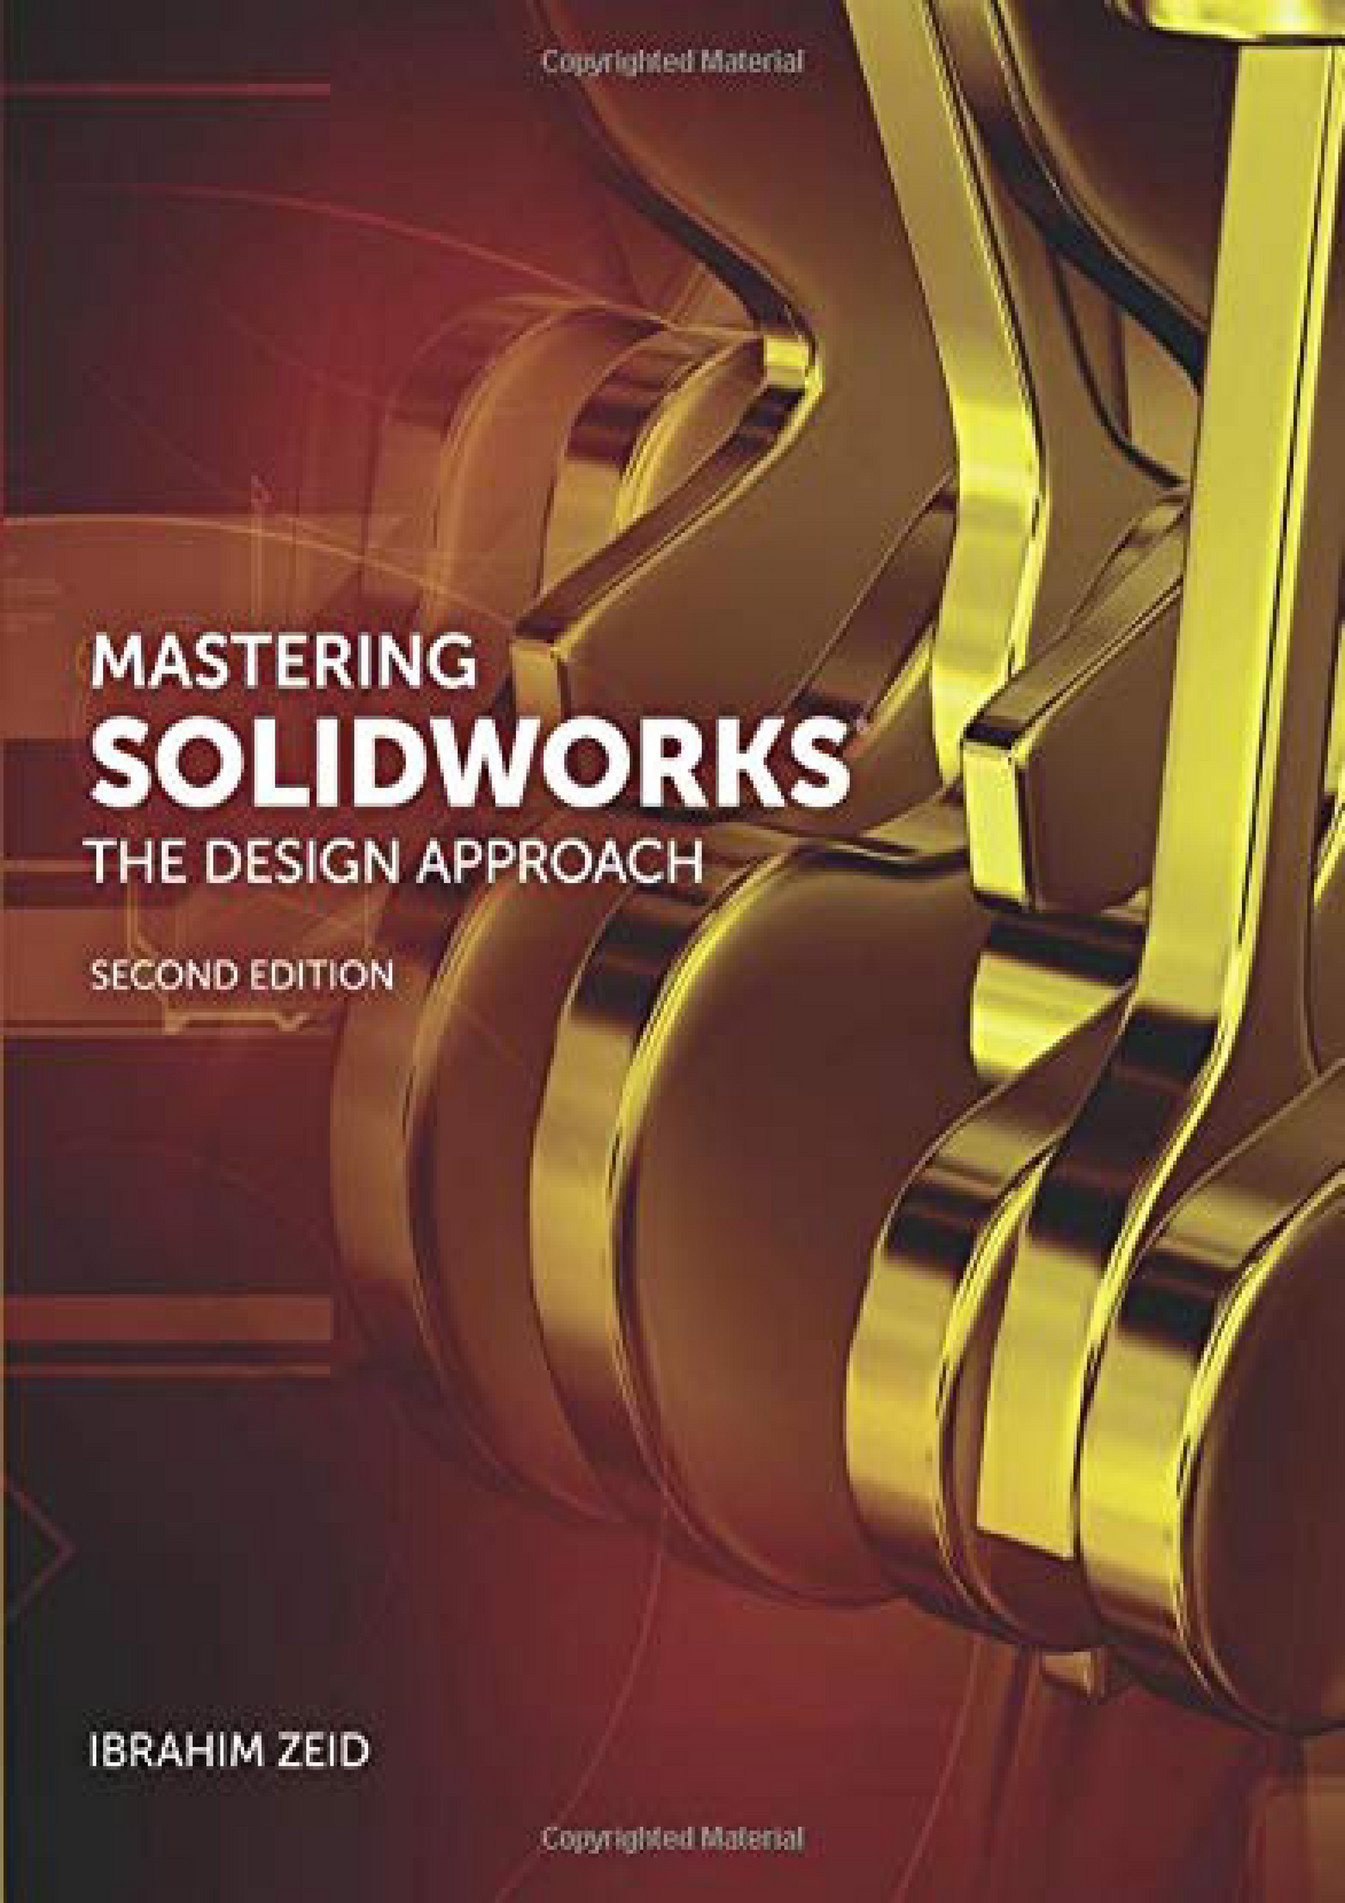 solidworks ebook free download